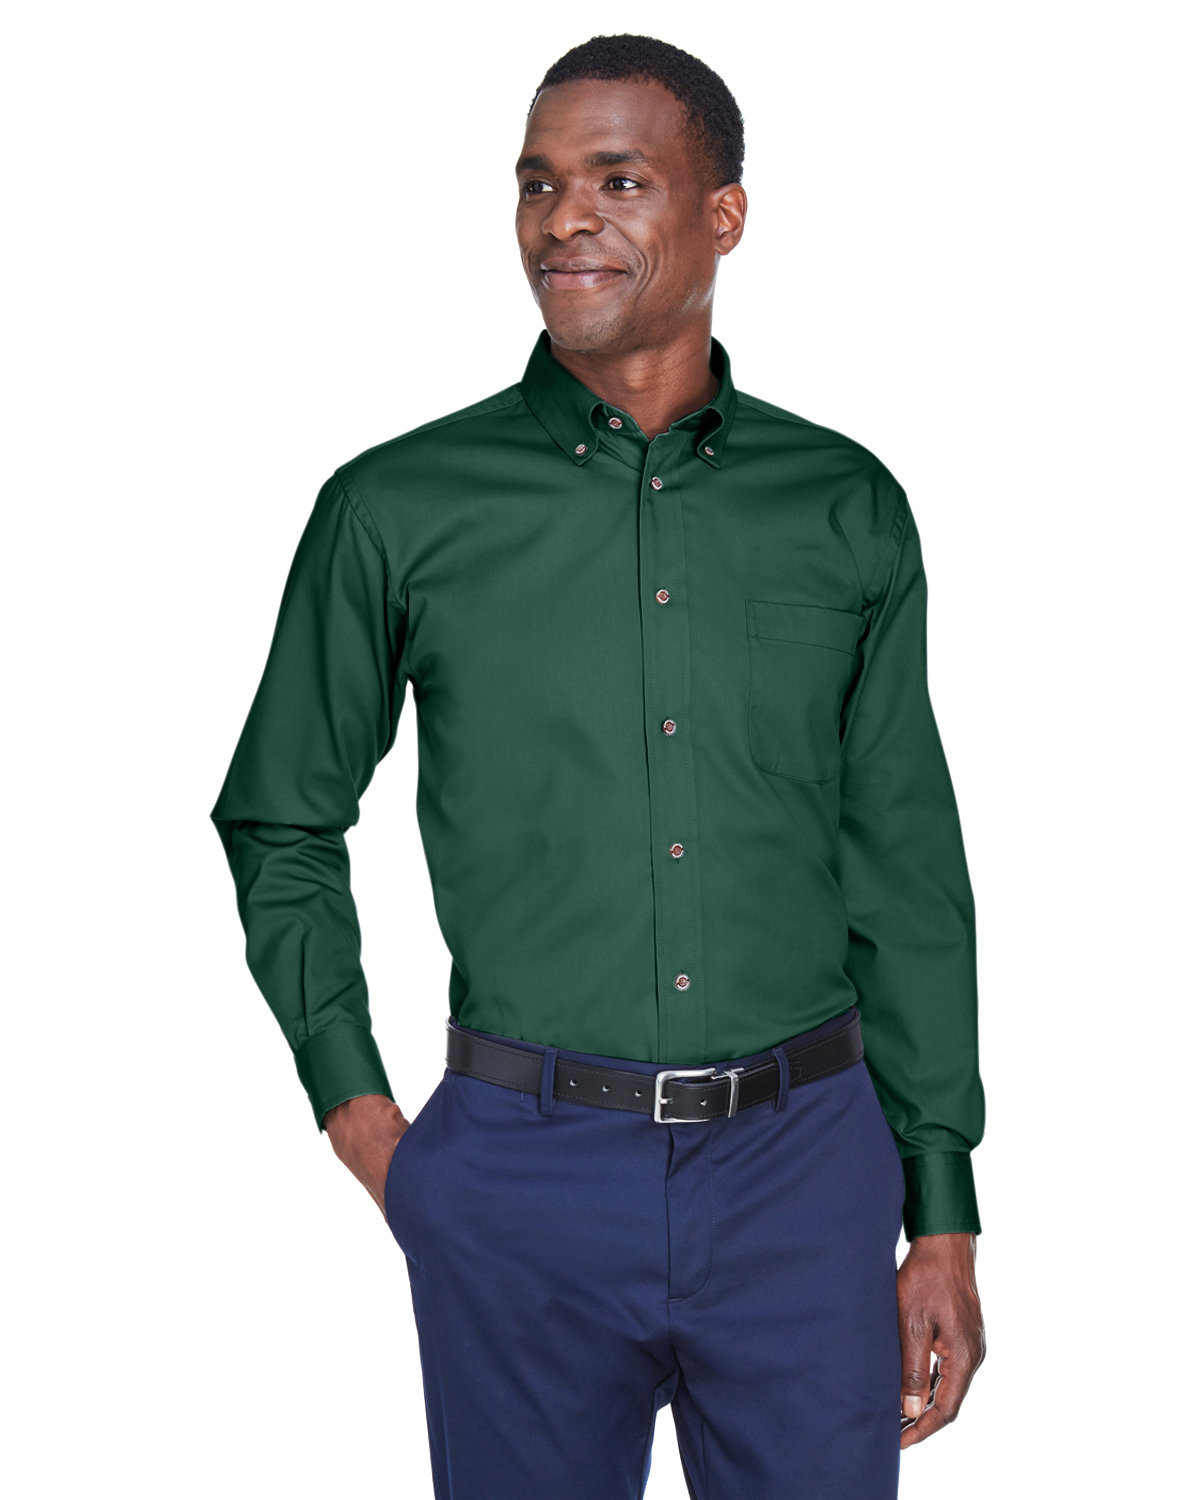 M&O - Poly-Blend Long Sleeve T-Shirt - 3520 - Bravoapparel